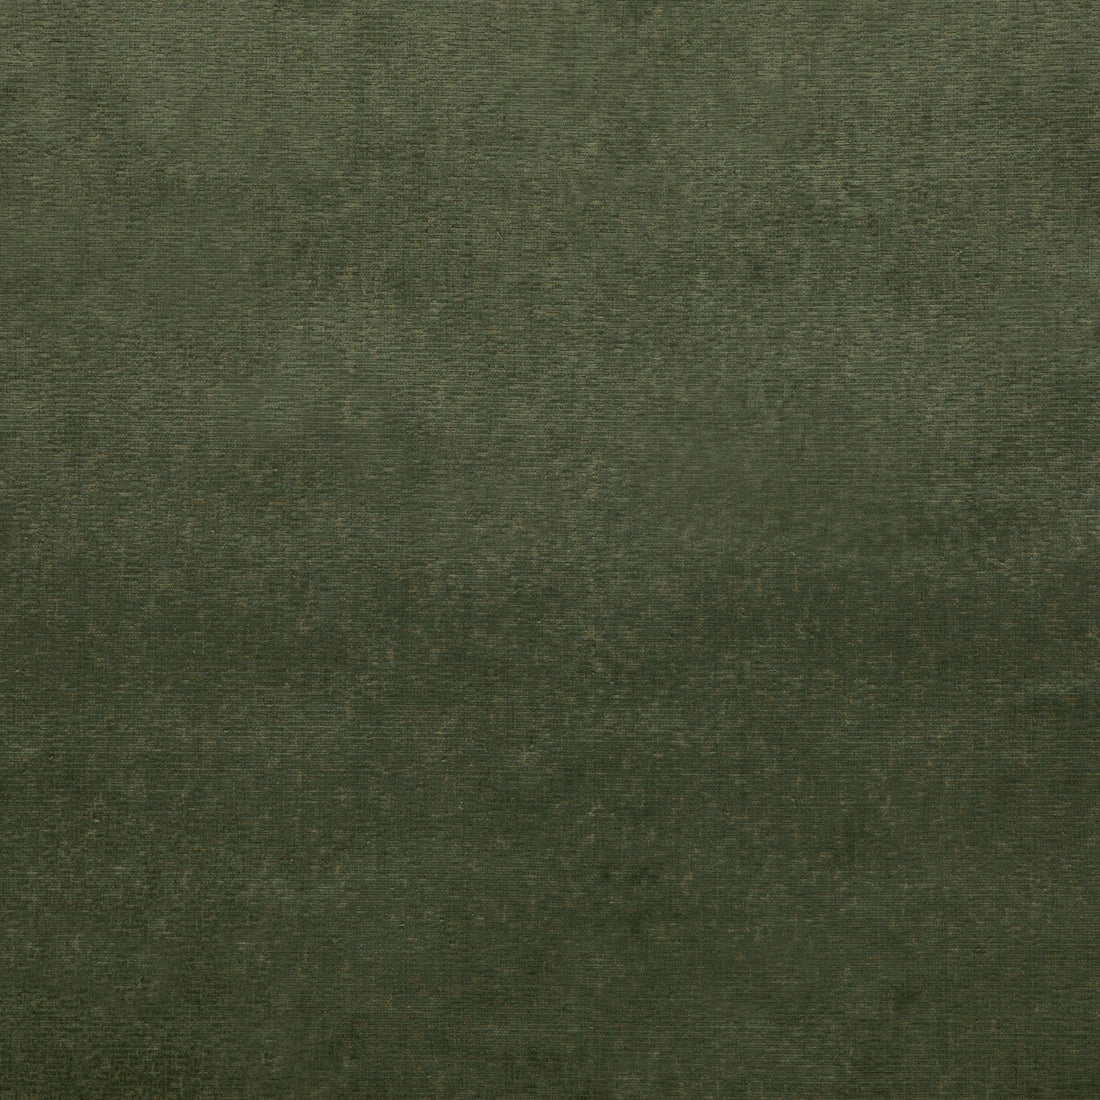 Alma Velvet fabric in forest color - pattern BF10827.794.0 - by G P &amp; J Baker in the Coromandel Velvets collection